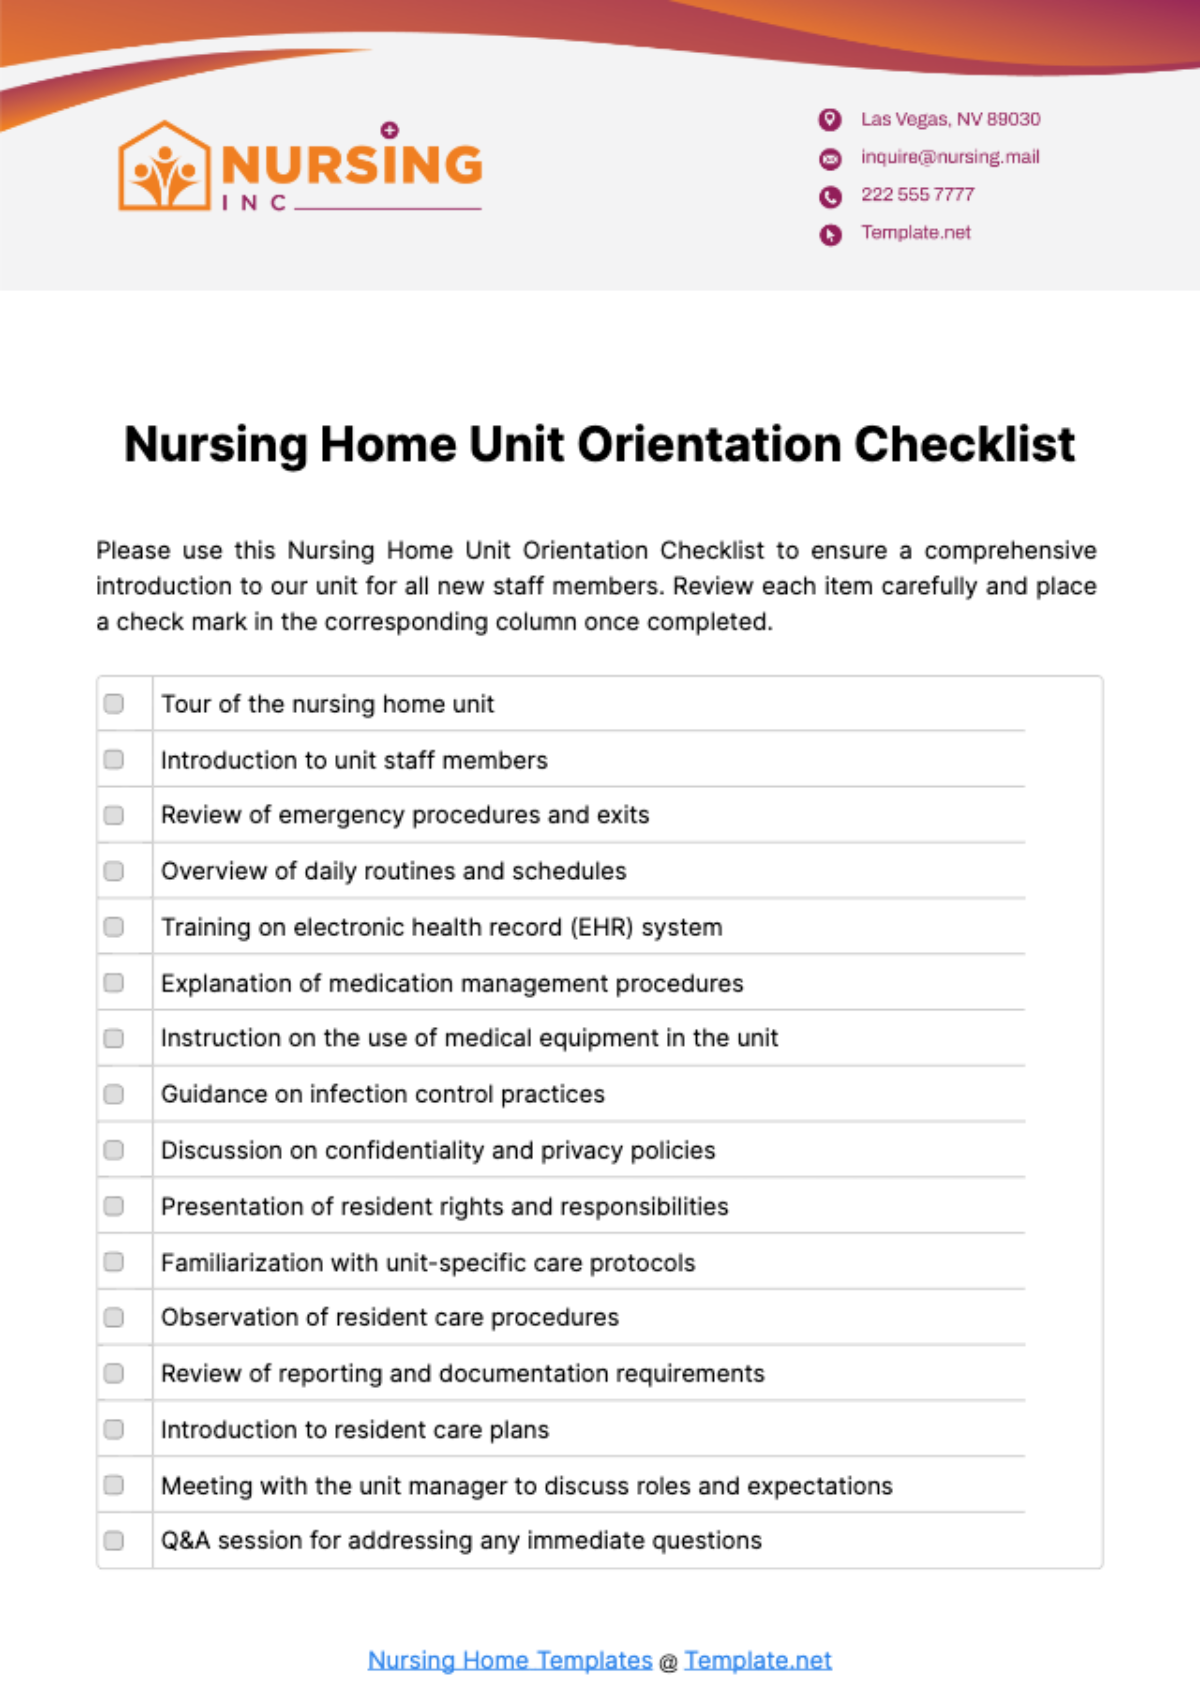 Nursing Home Unit Orientation Checklist Template